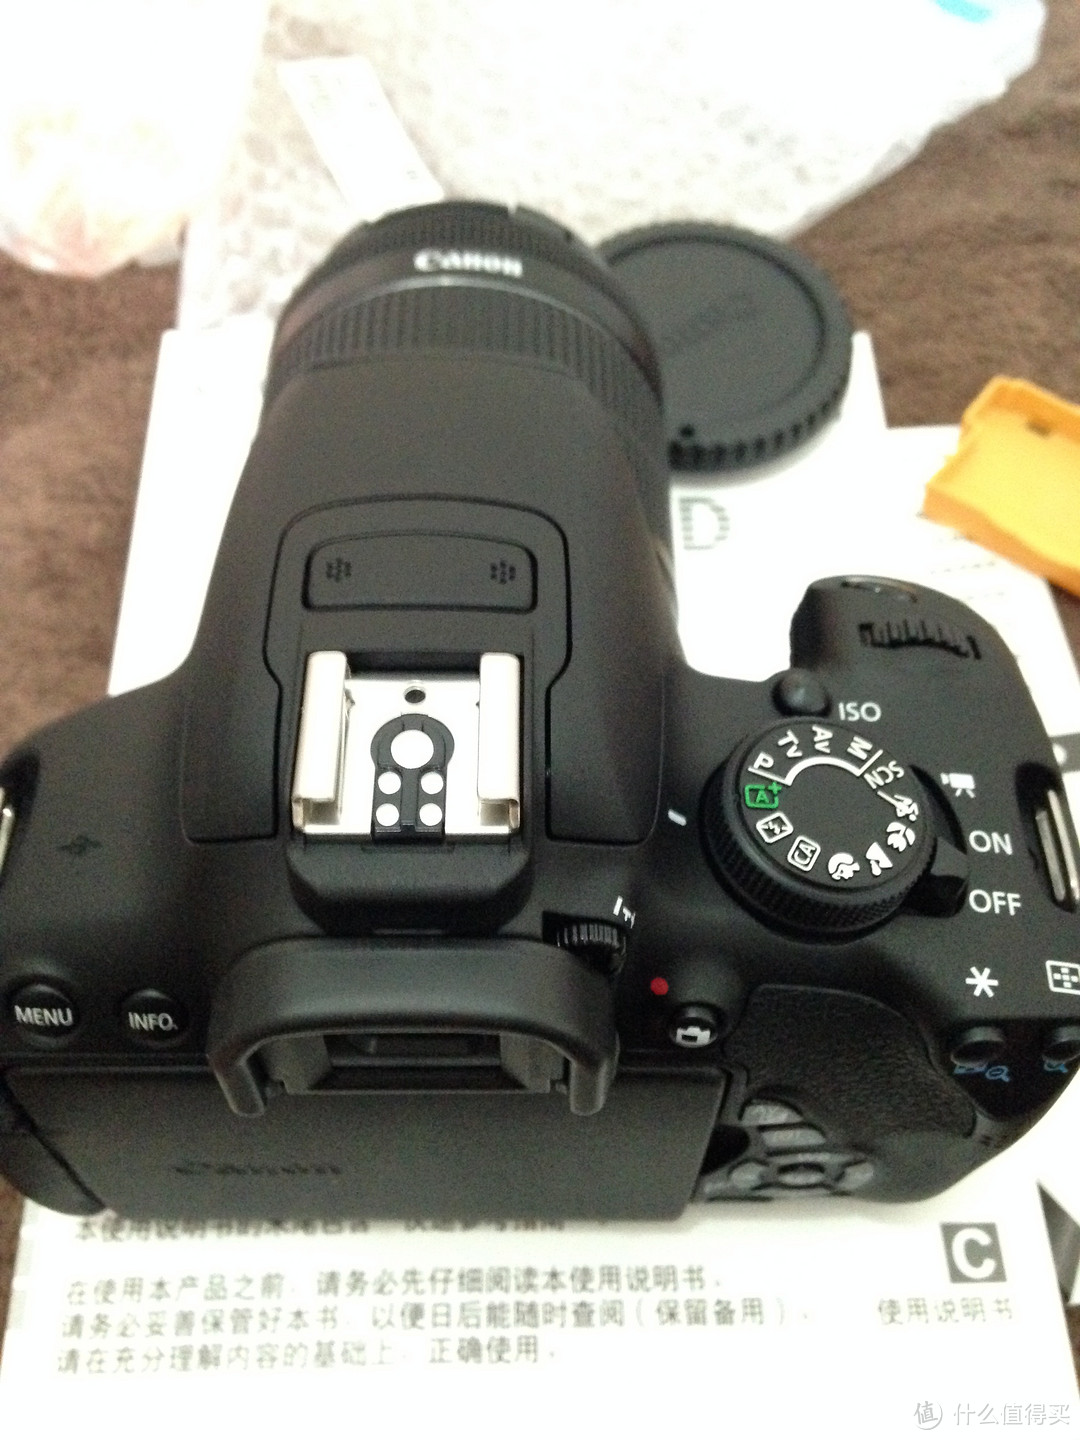 Canon 佳能 EOS 700D 单反套机 （EF-S 18-55mm f/3.5-5.6 IS STM 镜头）